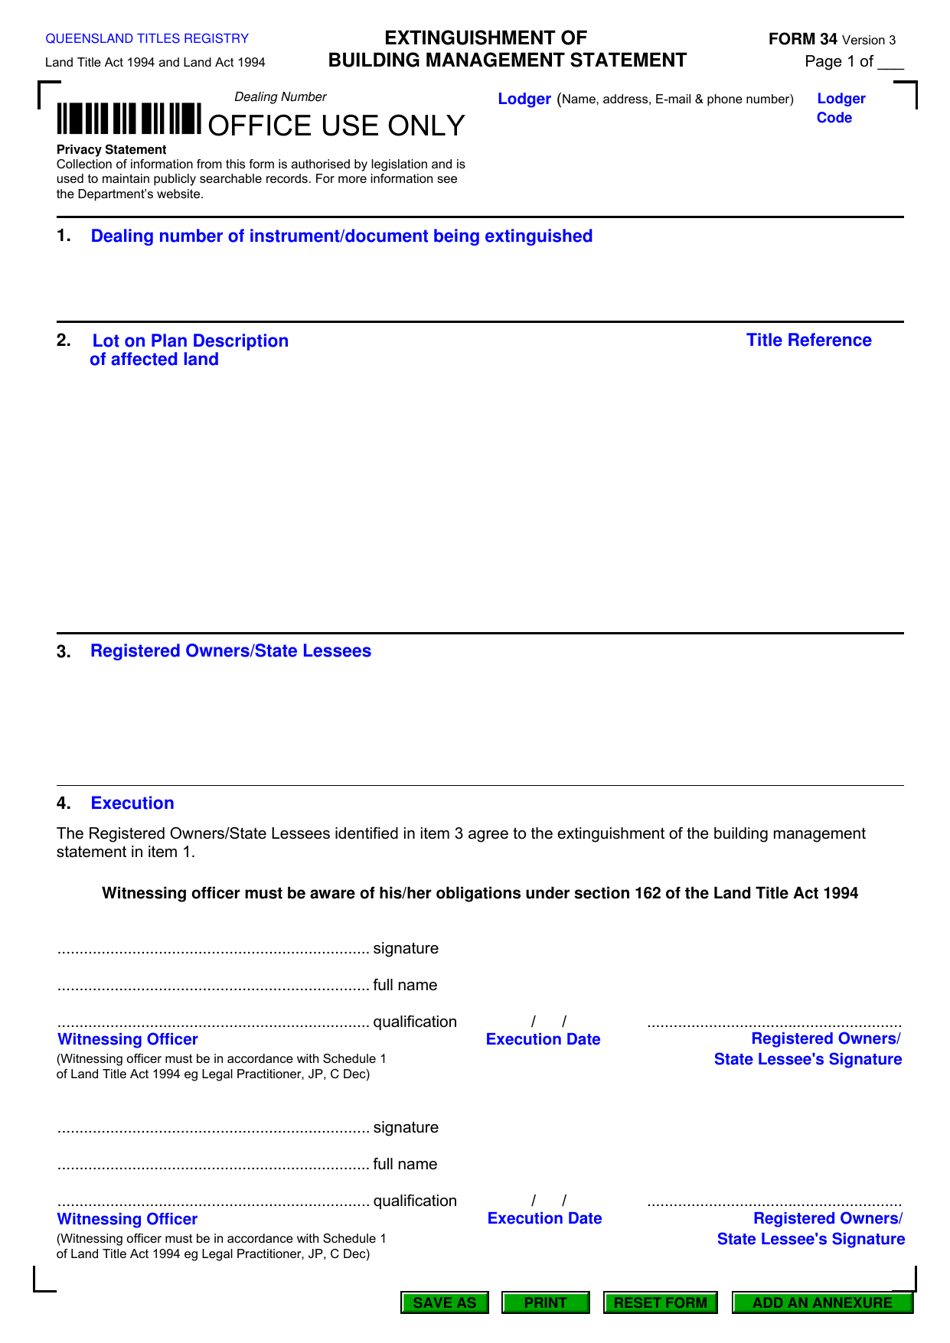 Form 34 Extinguishment of Building Management Statement - Queensland, Australia, Page 1